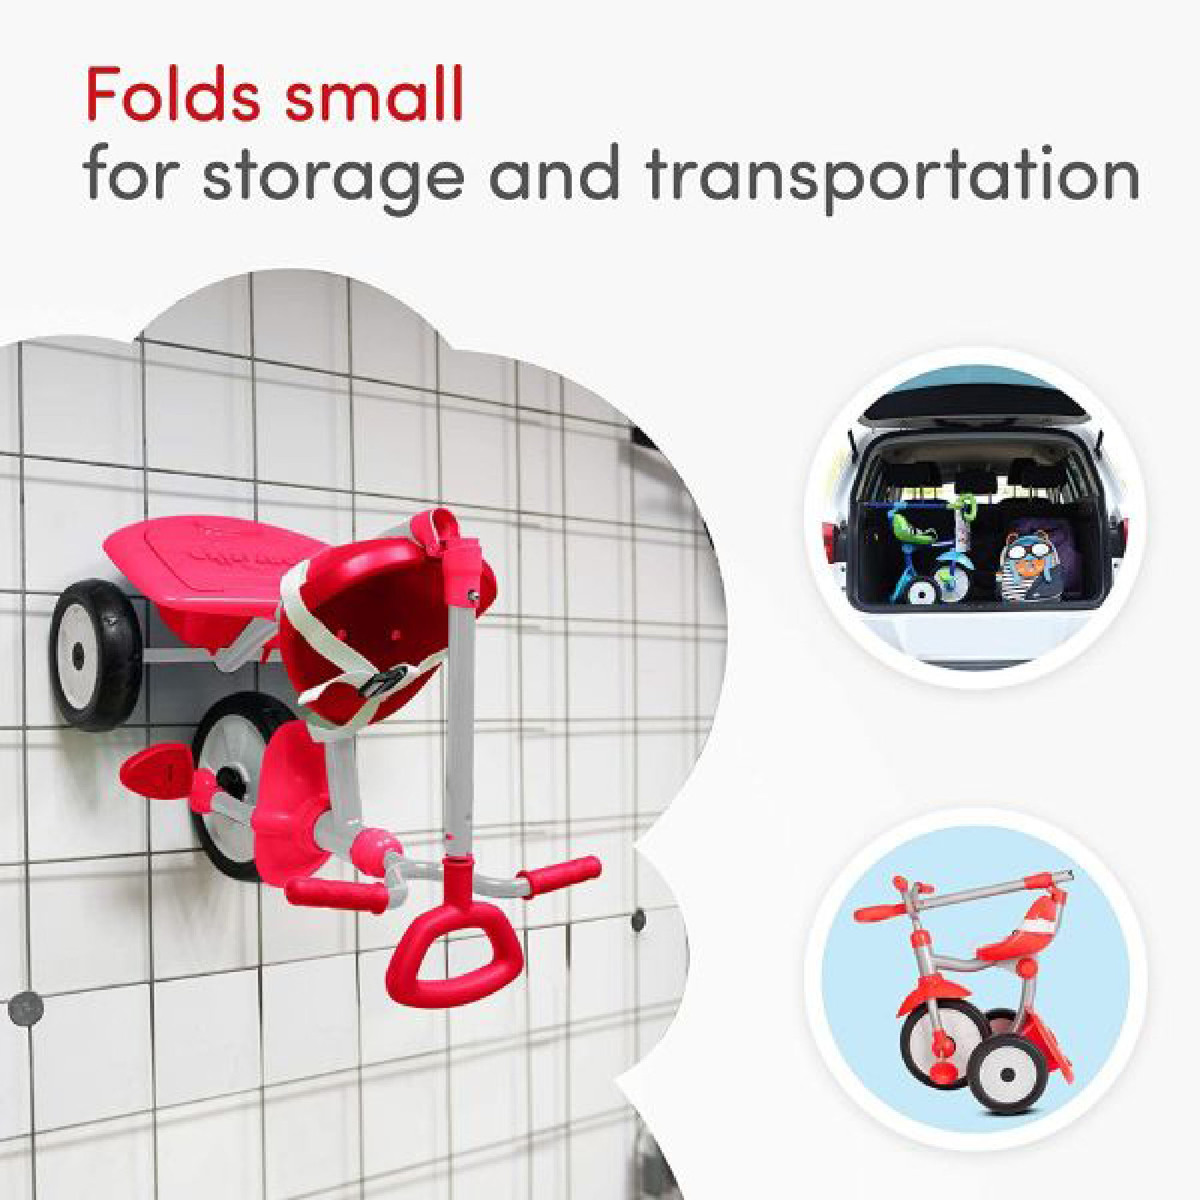 Smart Trike Folding Fun Tricycle, Red, 1310503